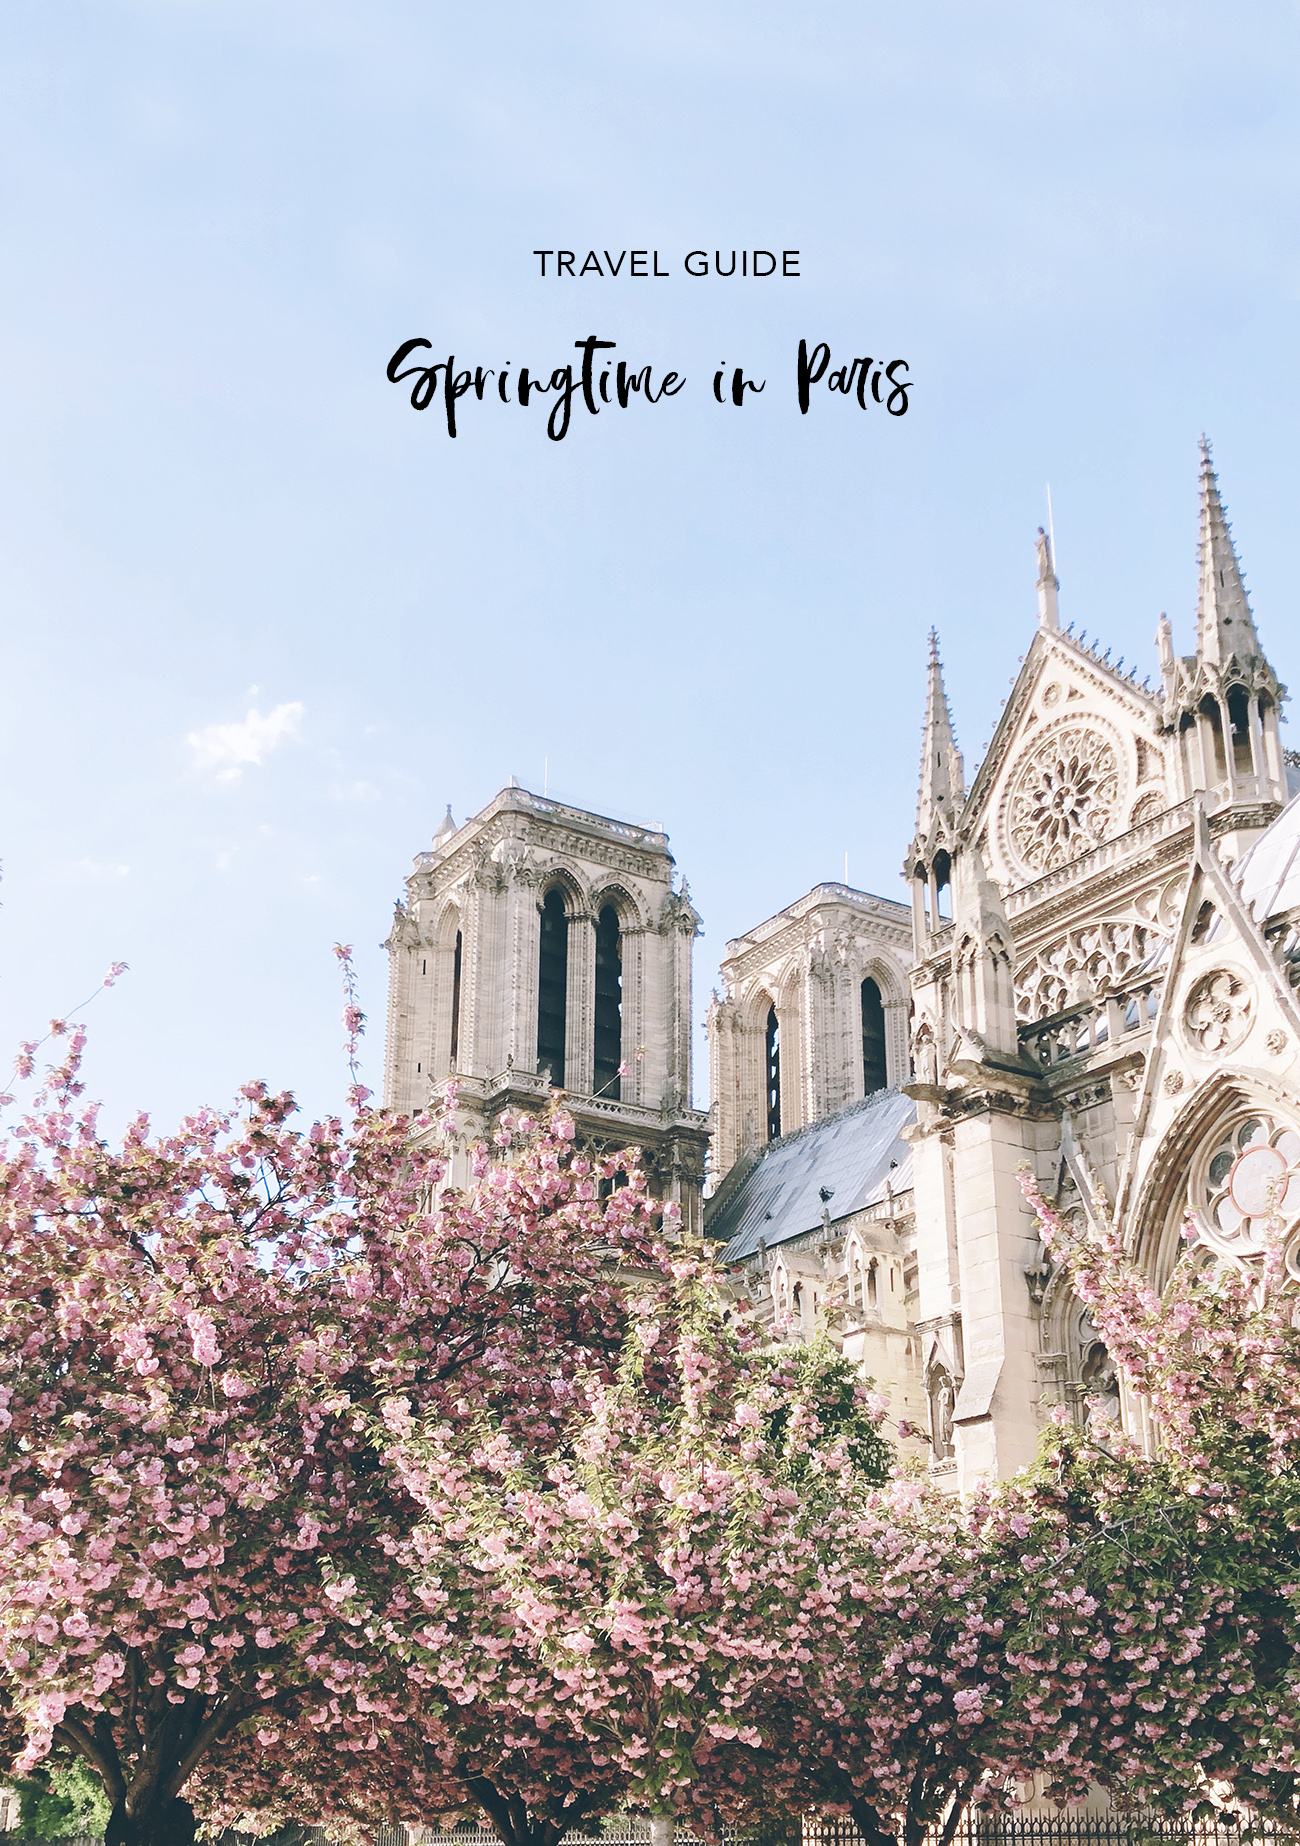 Travel Guide to Paris